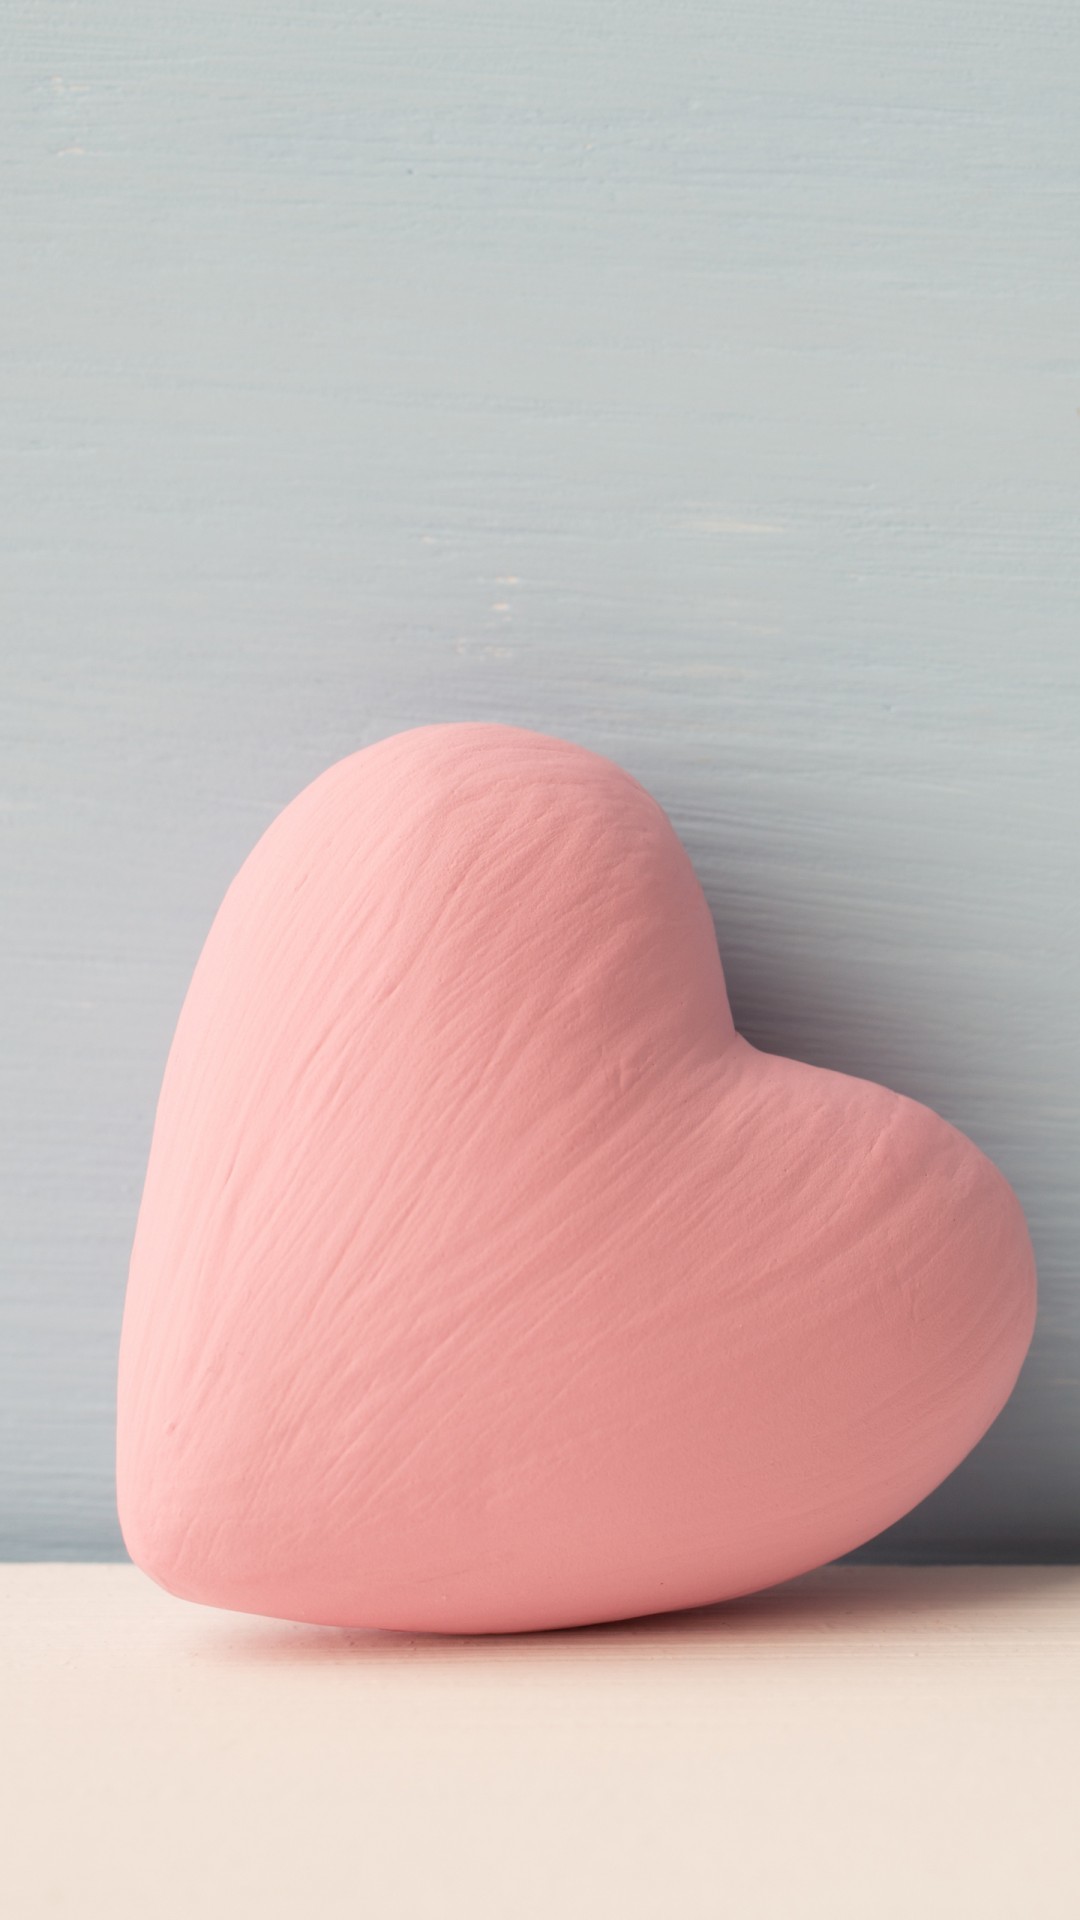 Pink Heart Wallpaper Hd - Hd Wallpapers Of Heart For I Phone - 1080x1920  Wallpaper 